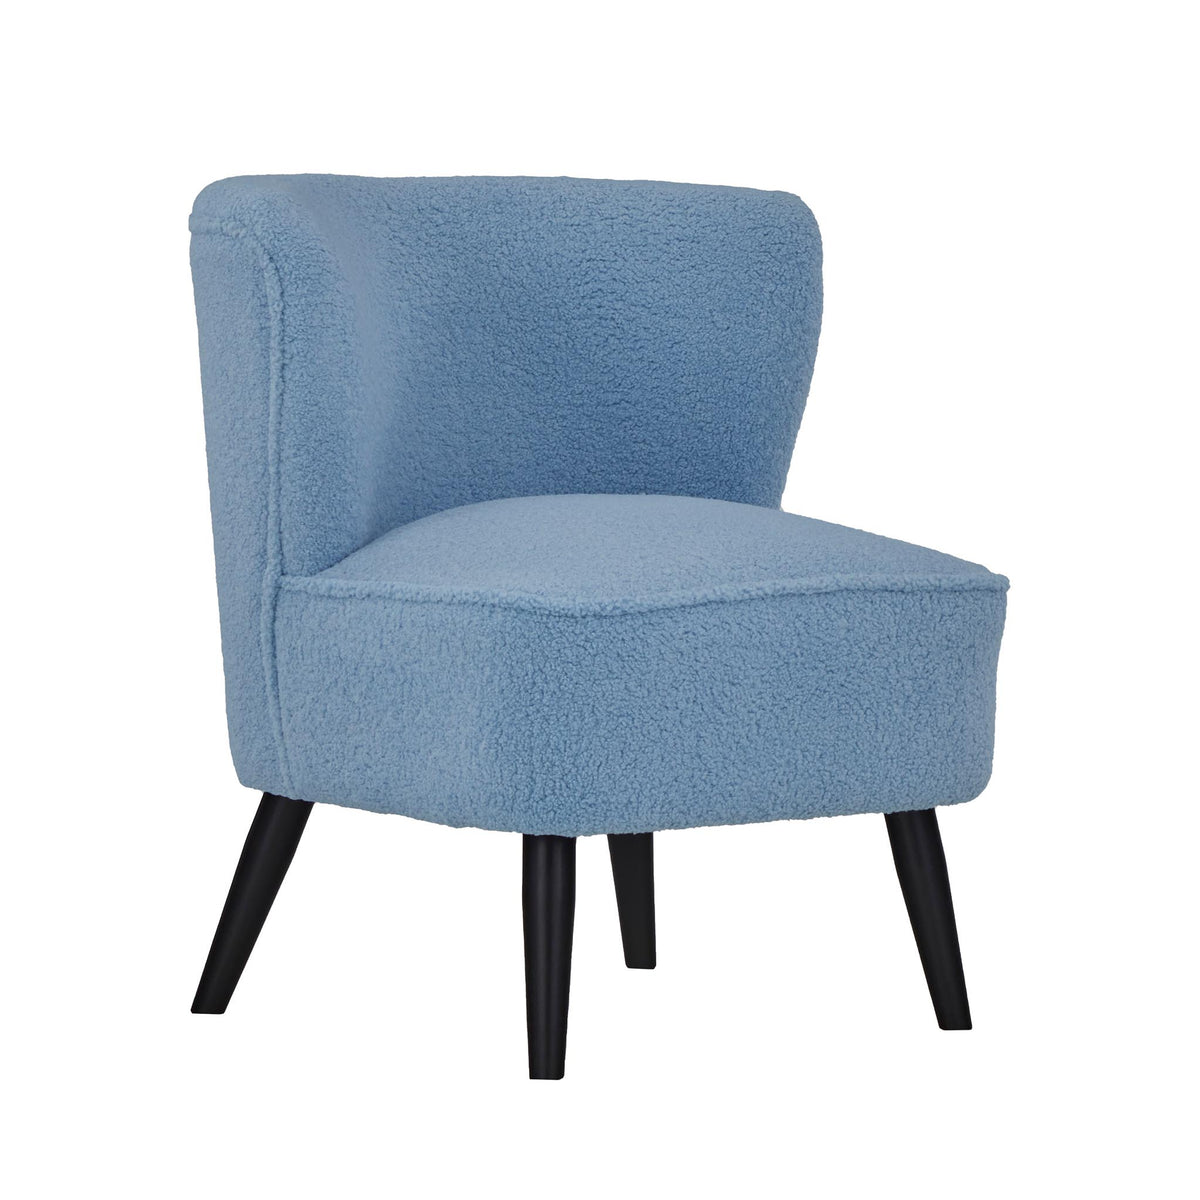 Malmesbury Teddy Accent Chair by Roseland Furniture